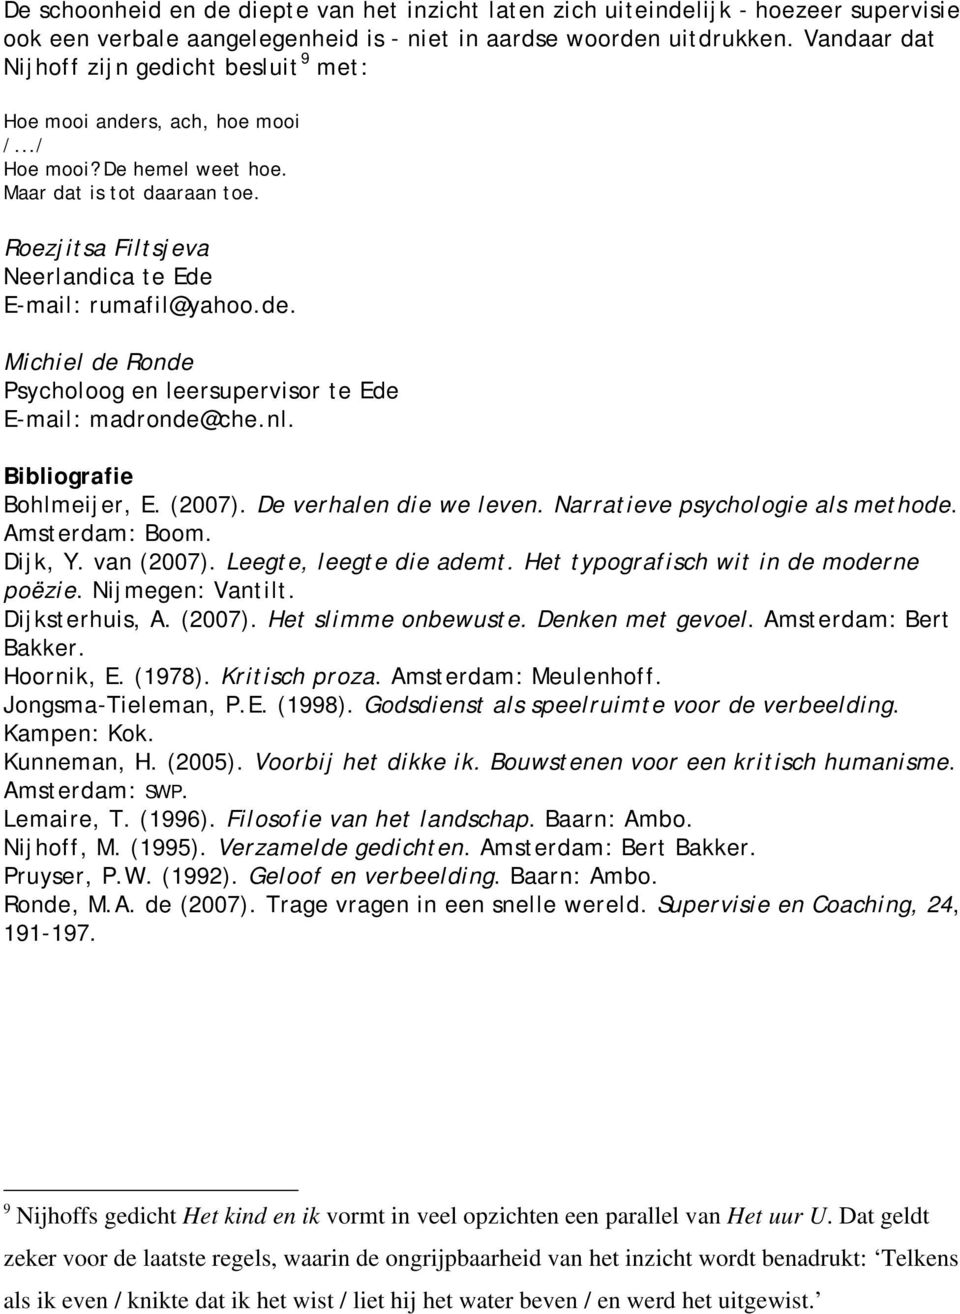 Roezjitsa Filtsjeva Neerlandica te Ede E-mail: rumafil@yahoo.de. Michiel de Ronde Psycholoog en leersupervisor te Ede E-mail: madronde@che.nl. Bibliografie Bohlmeijer, E. (2007).